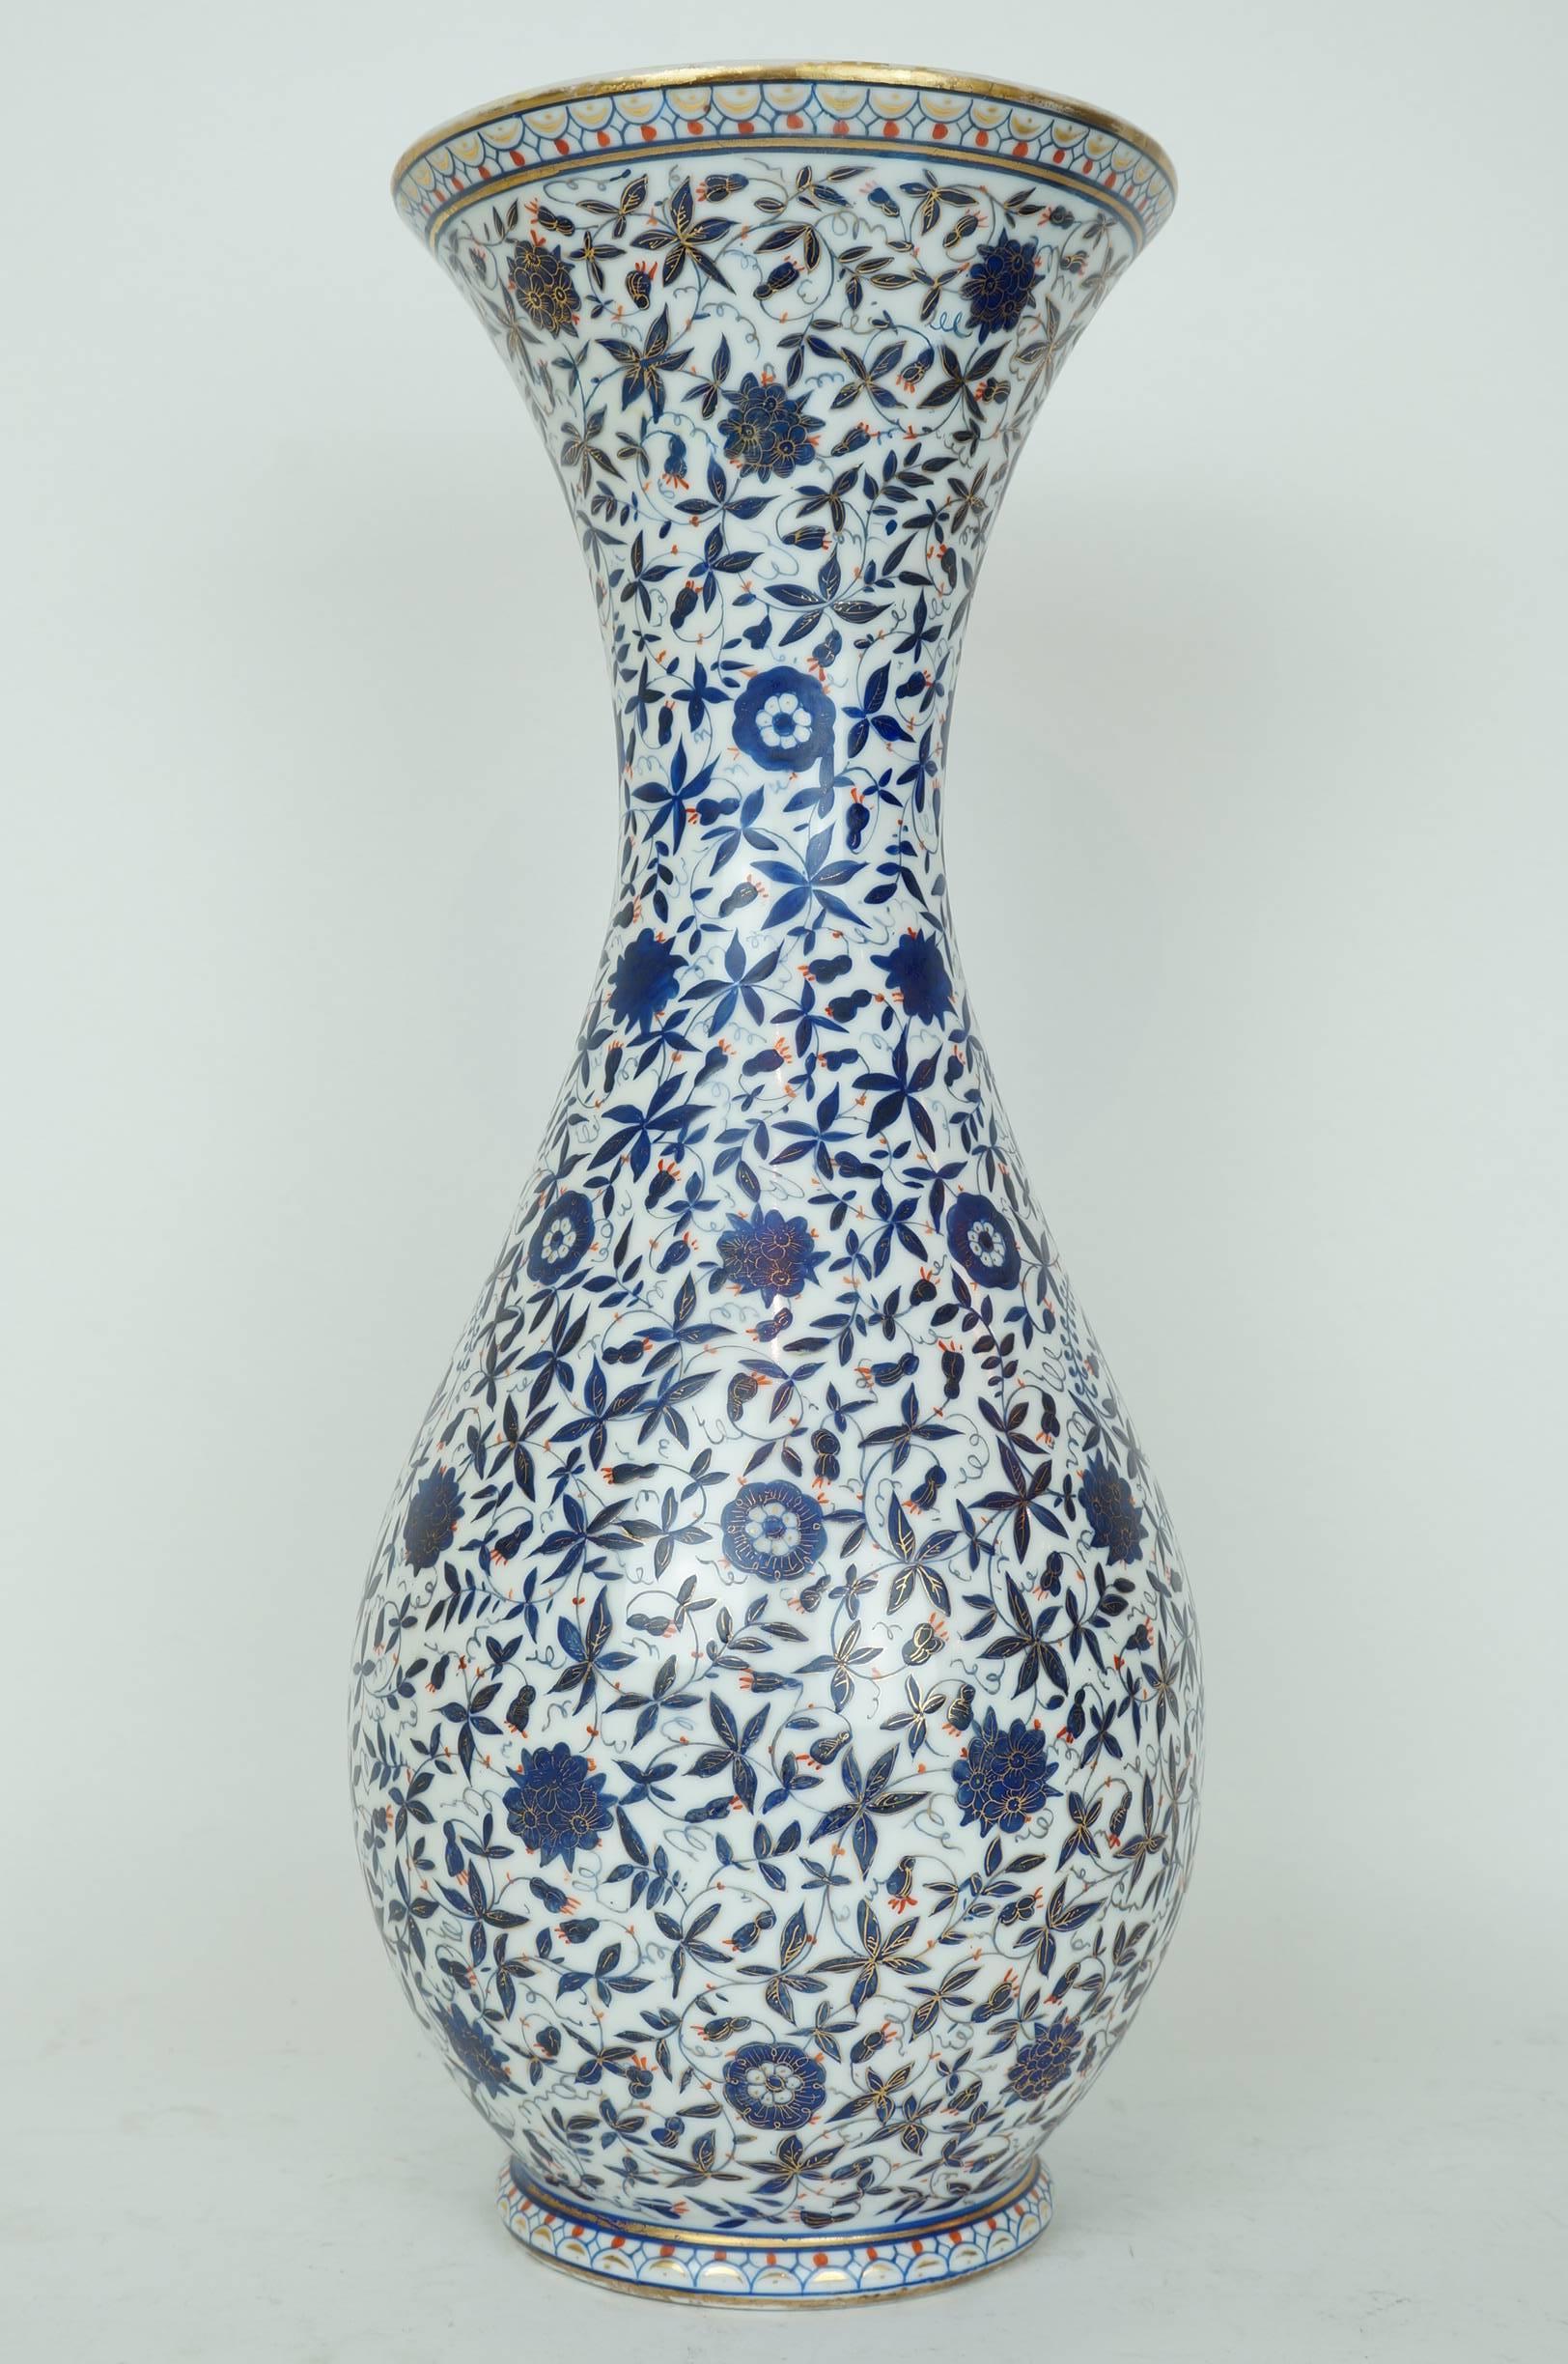 Beautiful Pair of Turkish Iznik Design Blue and White Porcelain Flower Vases
tock Number: DA141